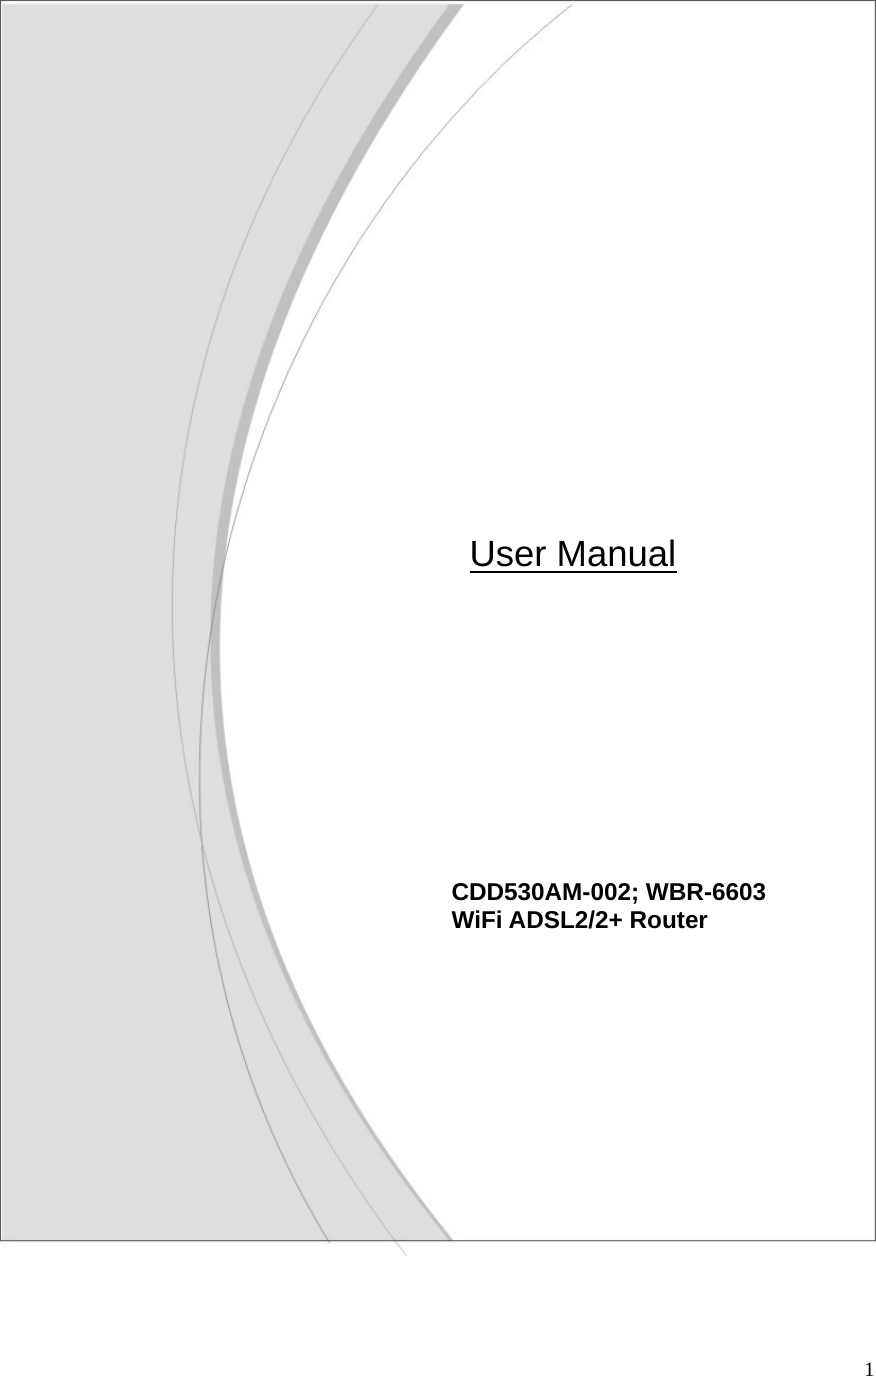  1                                            CDD530AM-002; WBR-6603 WiFi ADSL2/2+ Router                   User Manual 